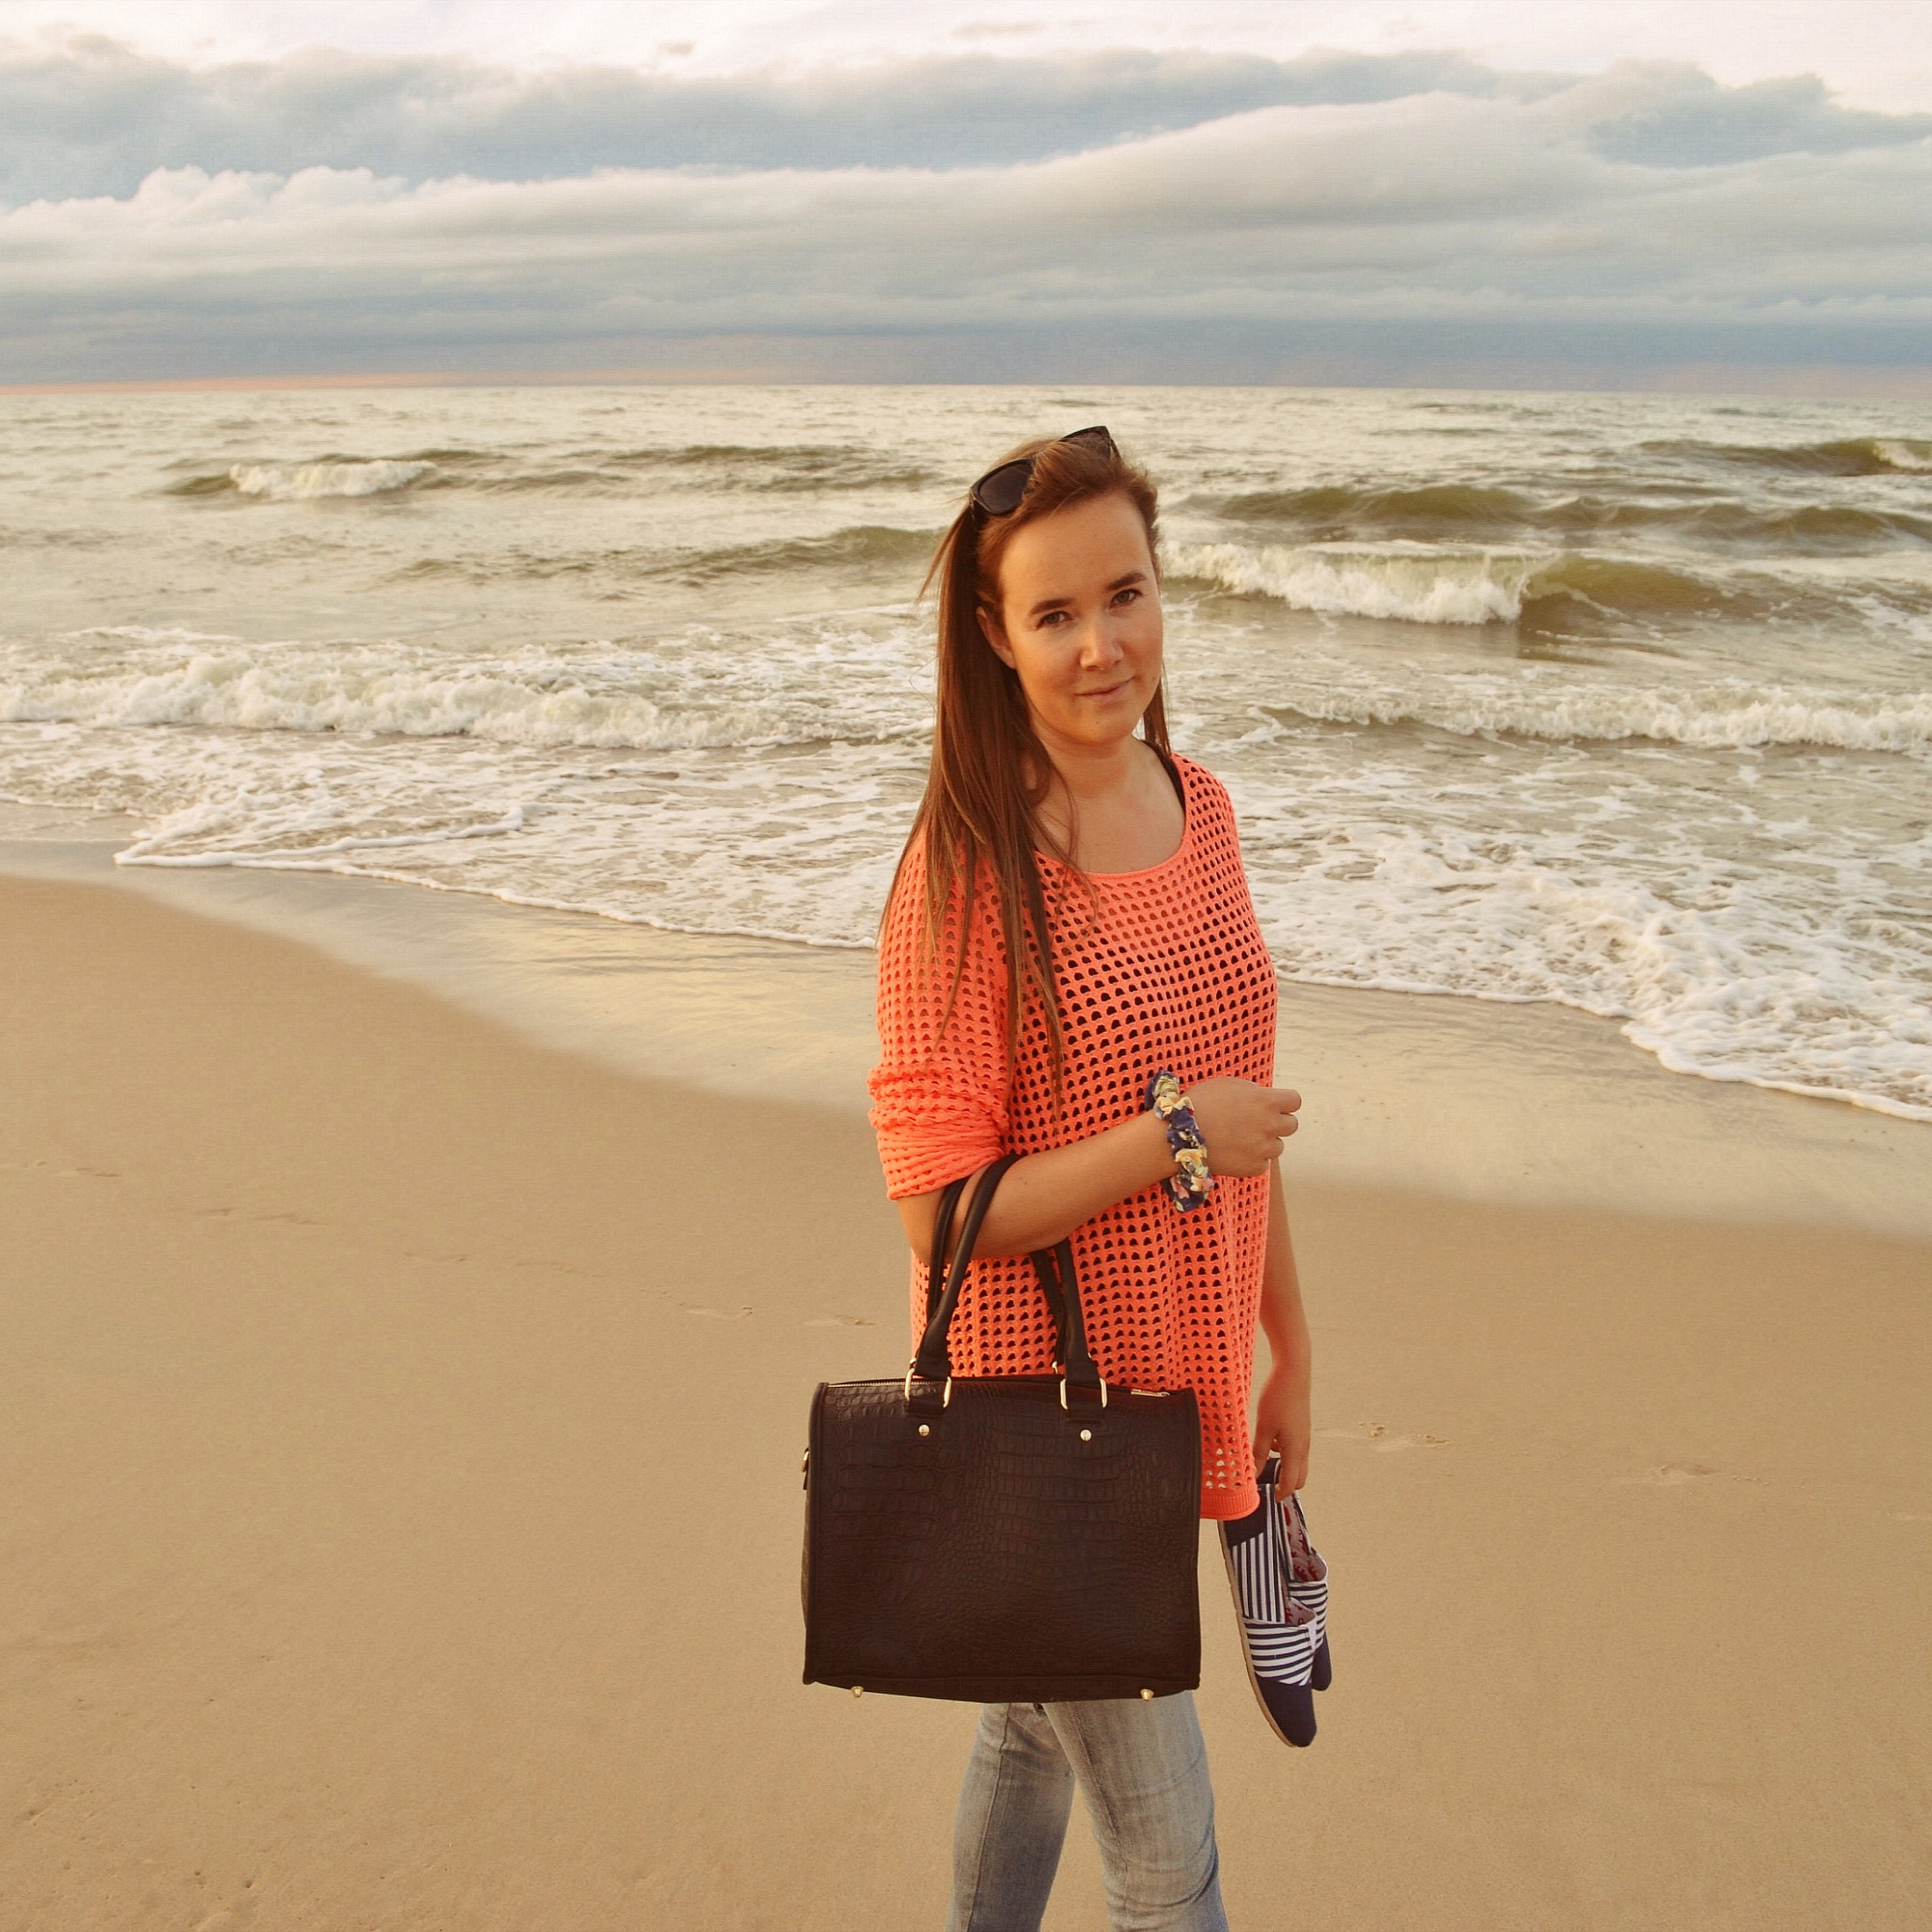 I love You, Baltic Sea!